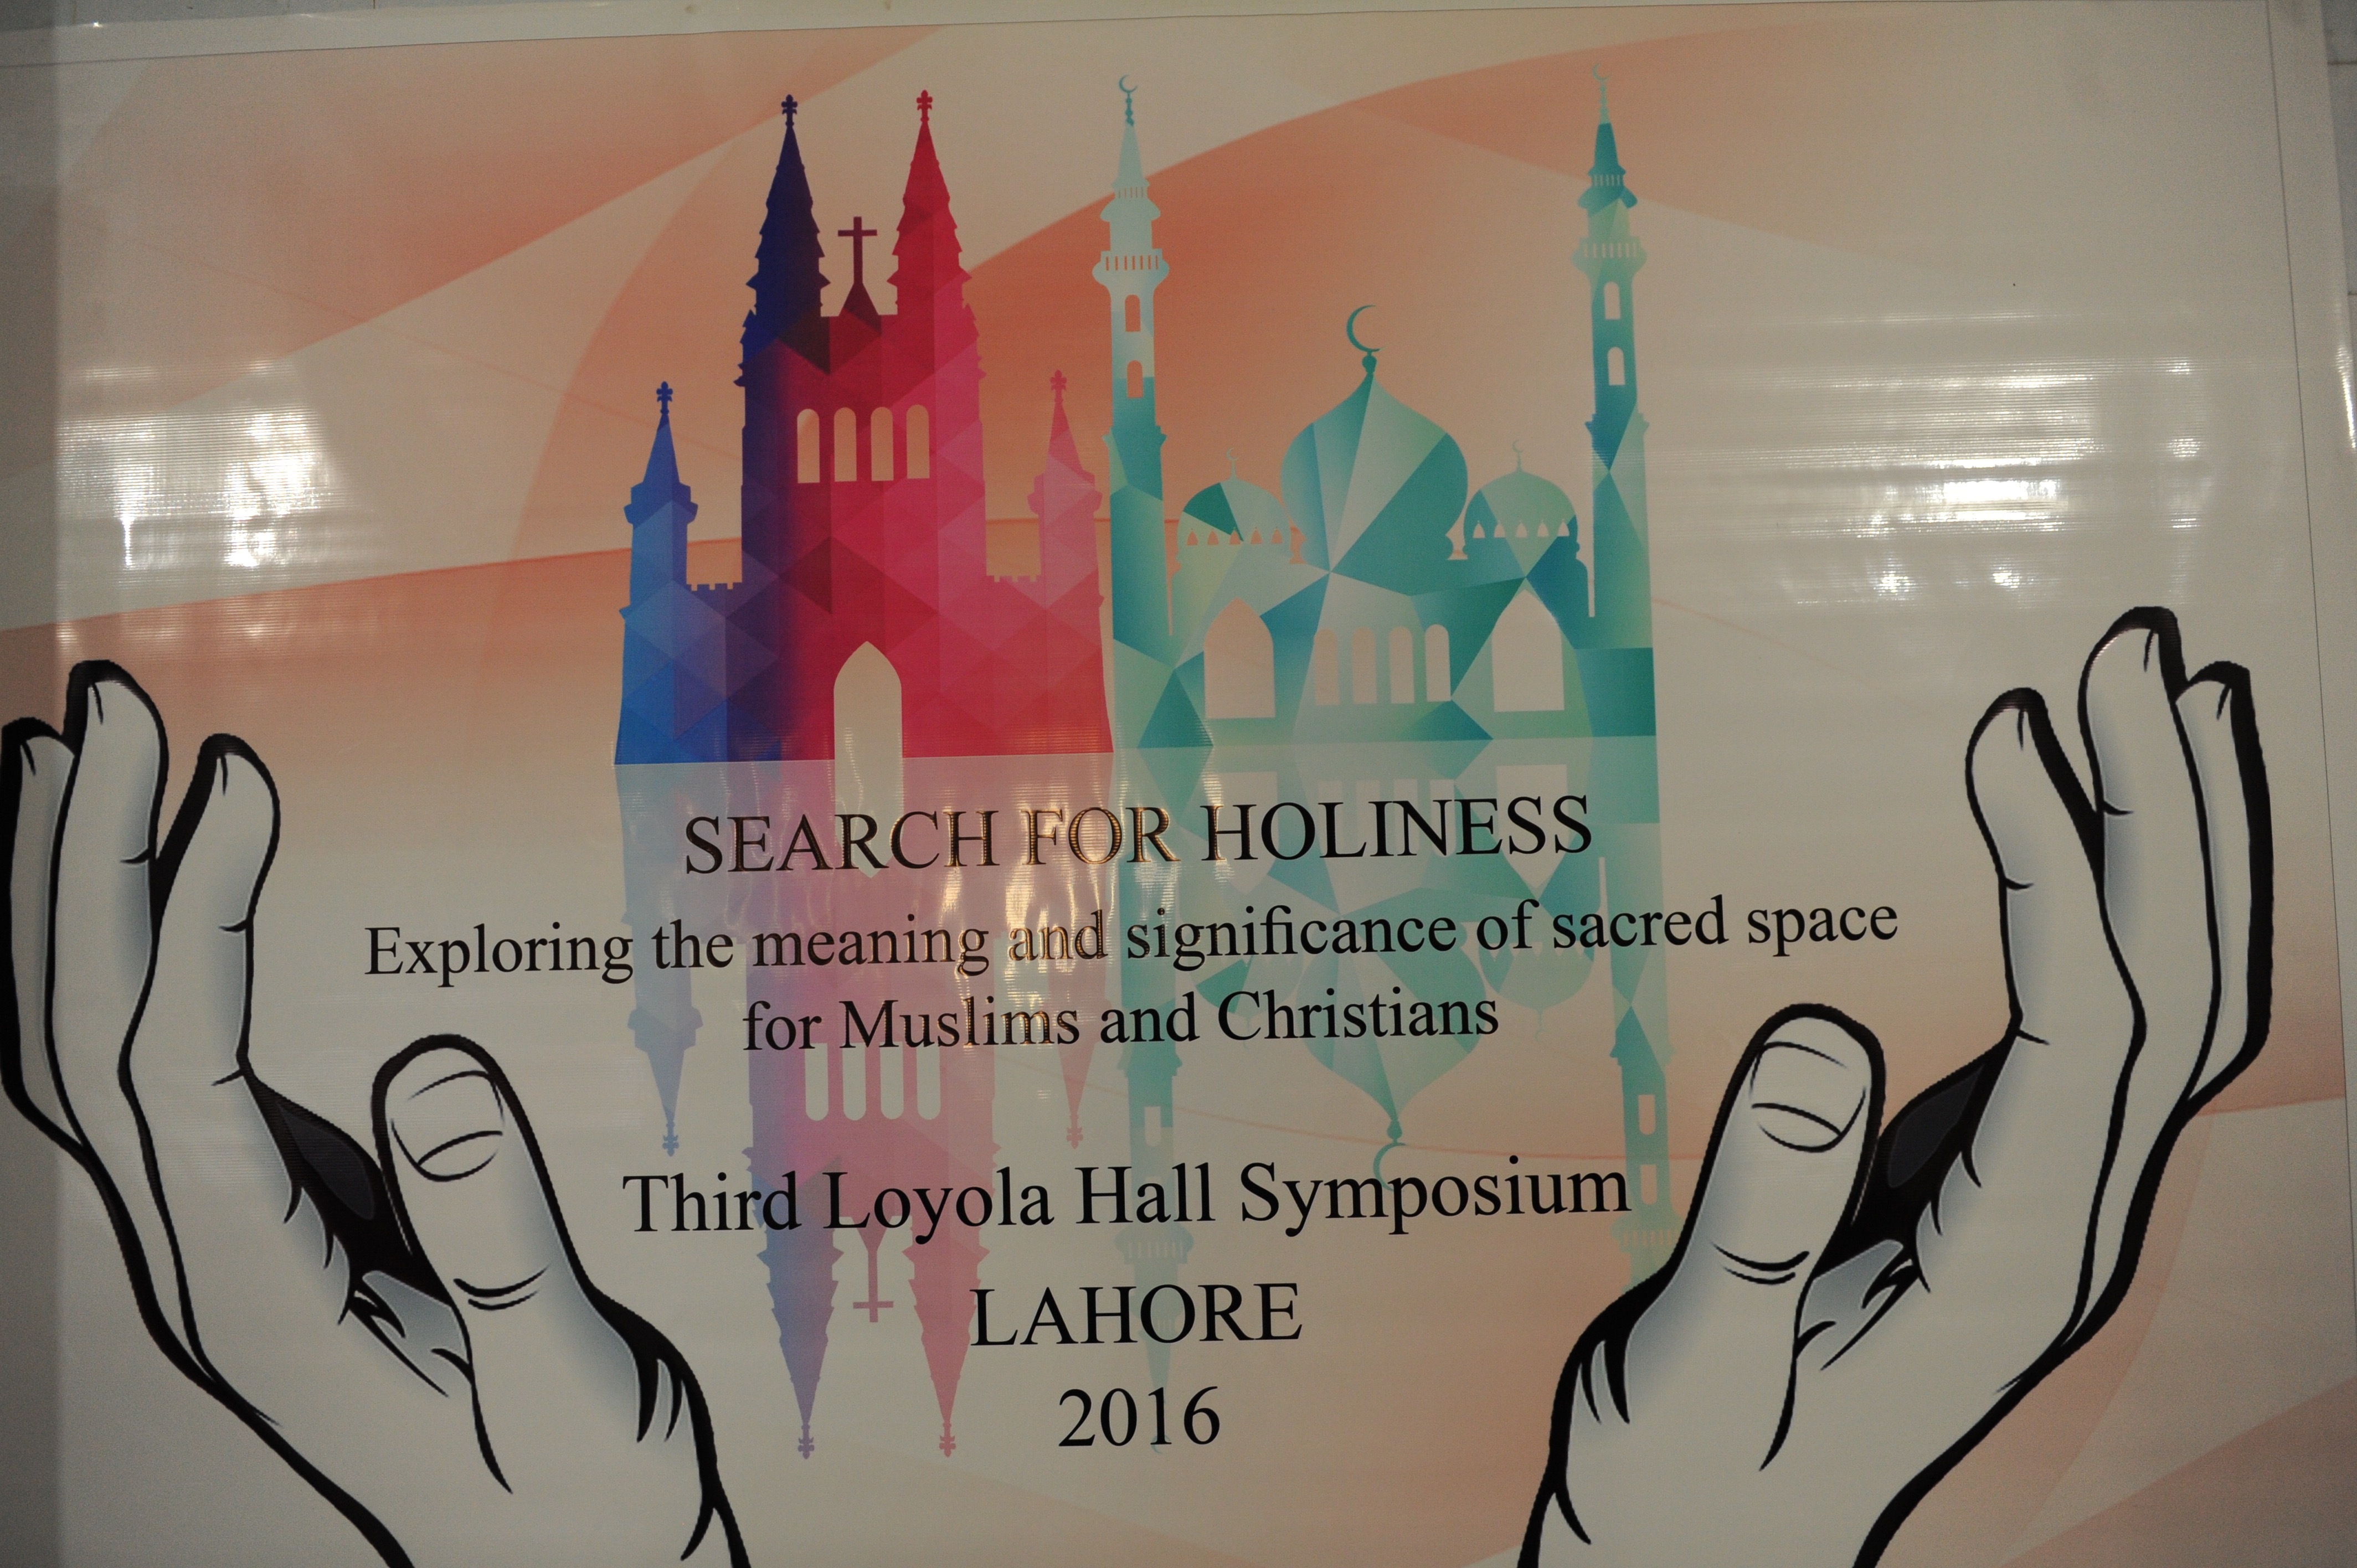 Third Loyola Hall Symposium, 2016